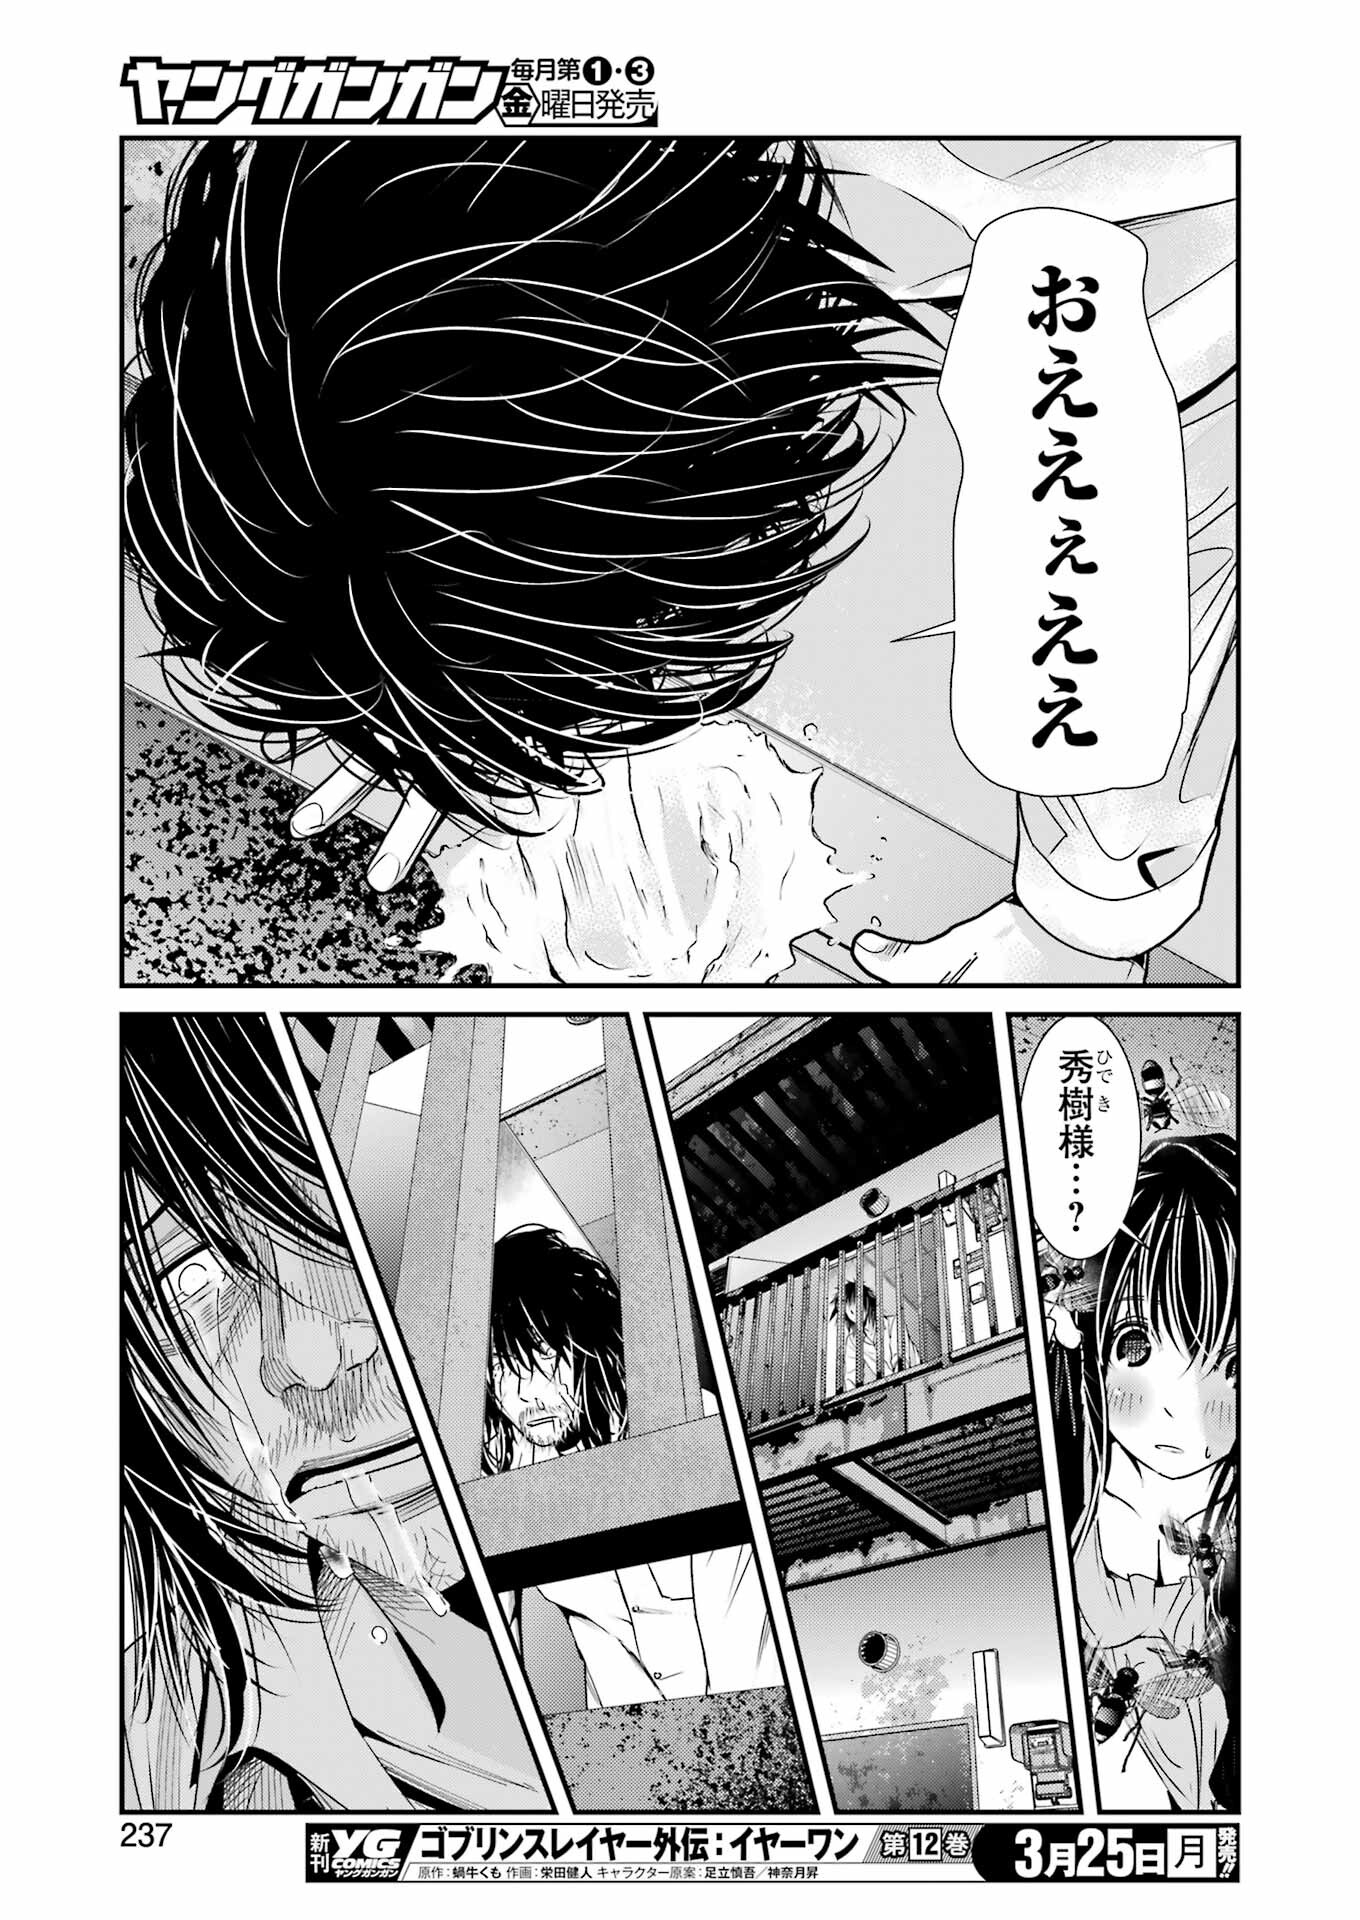 Suika wa Shoushika Tantou - Chapter 6 - Page 23